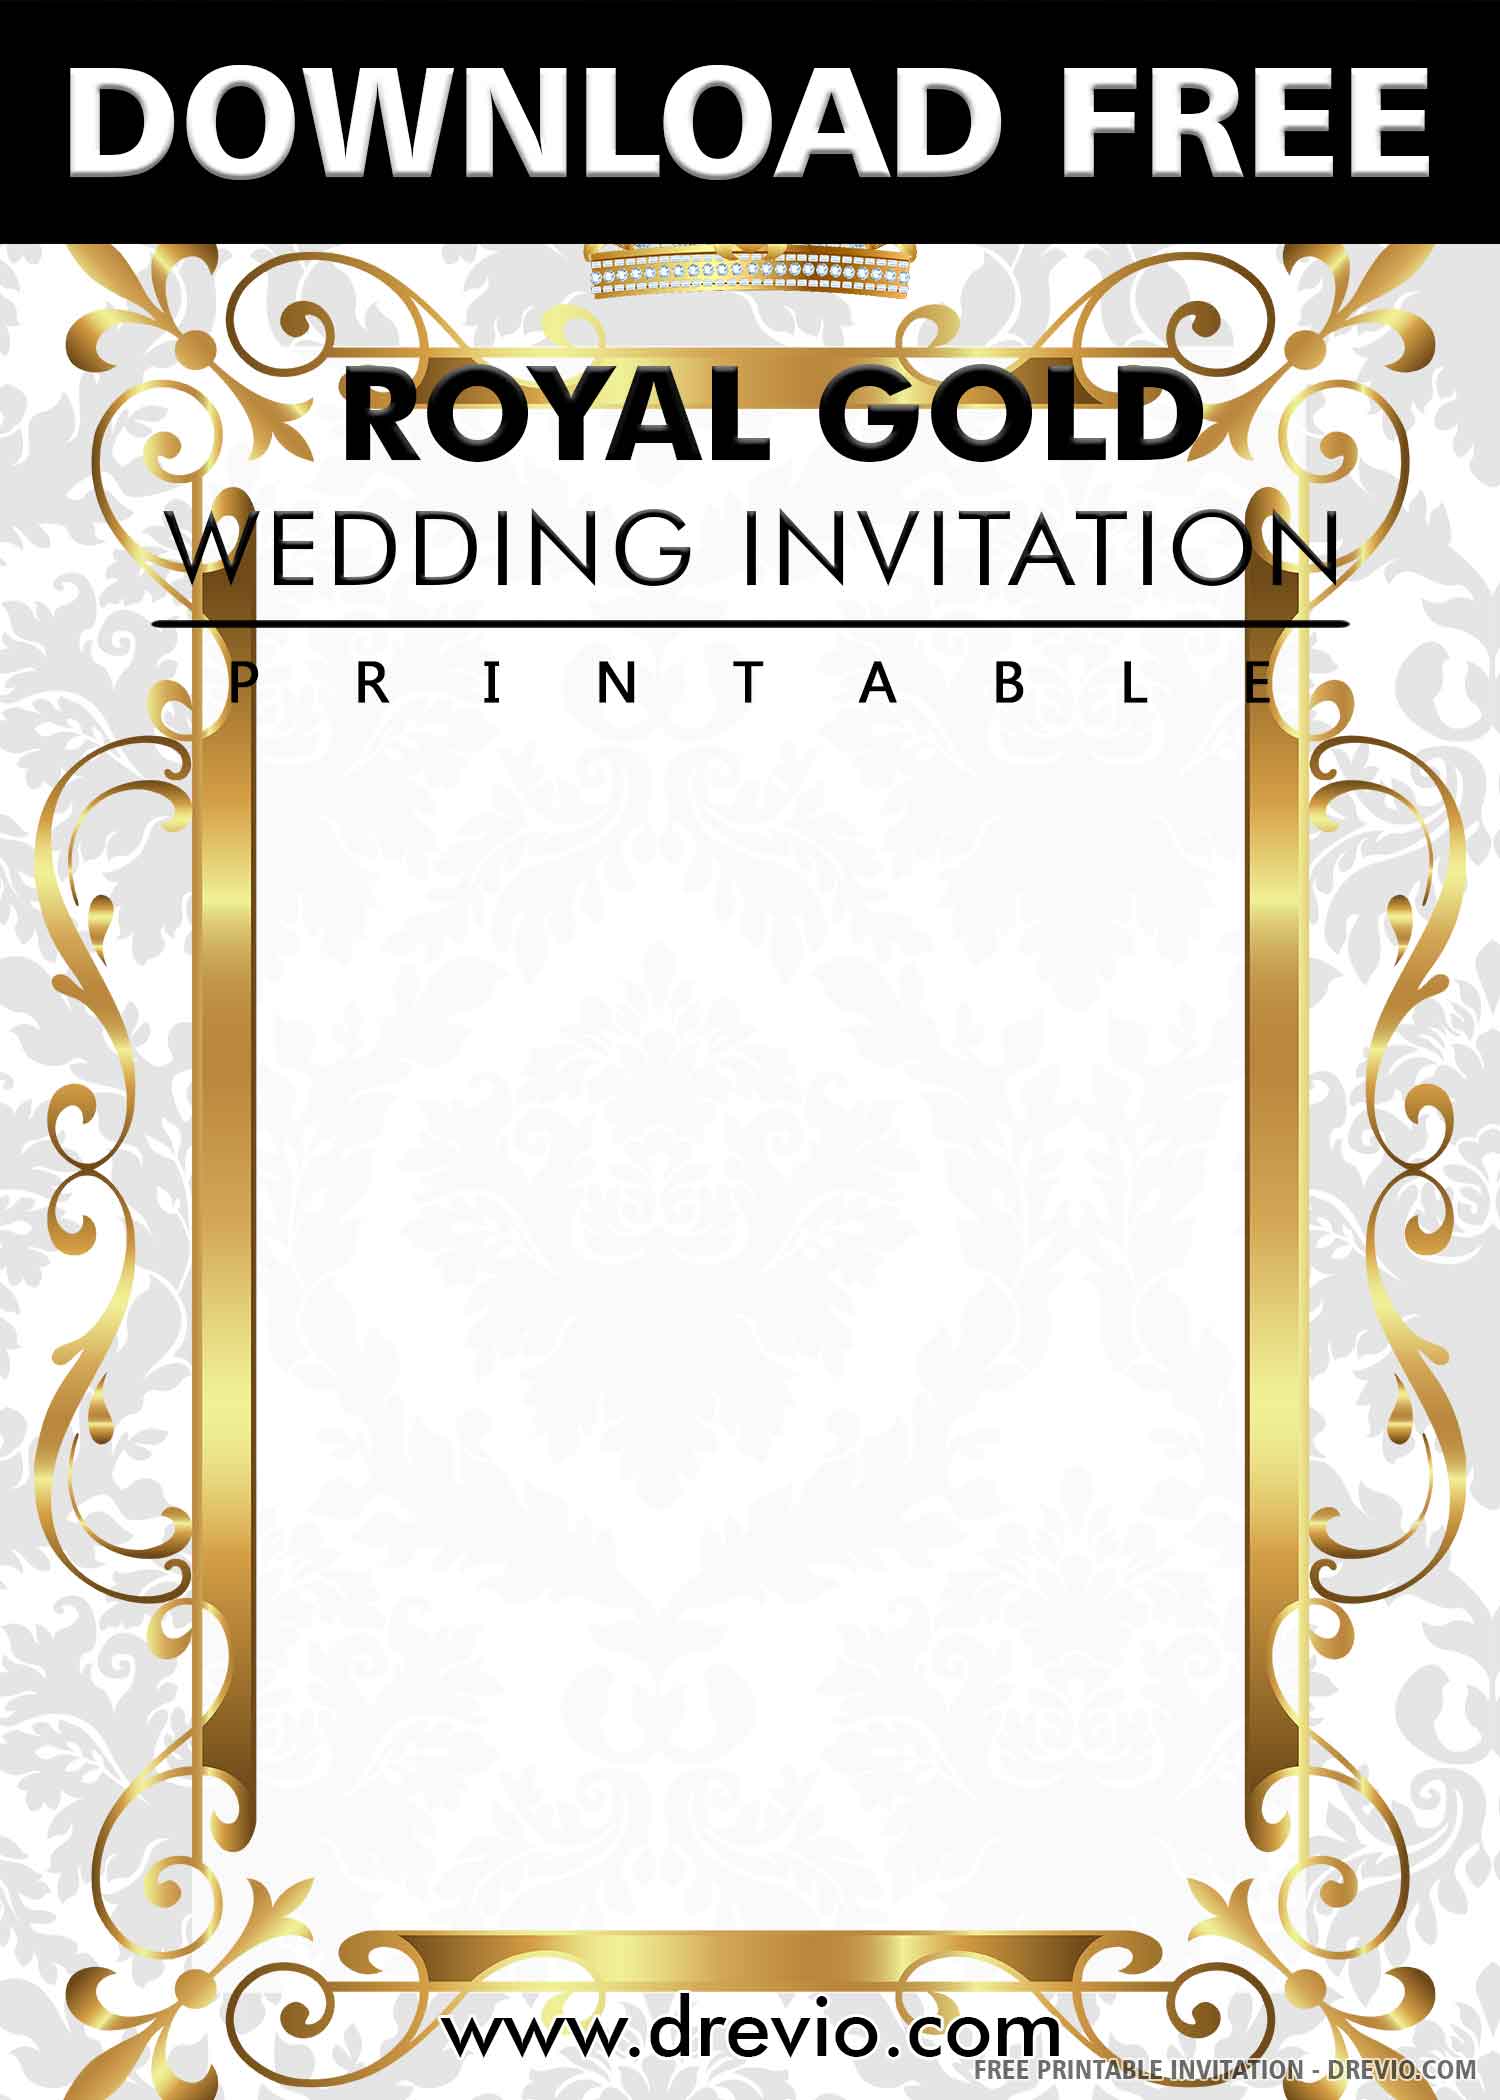 FREE PRINTABLE) – Gold Royal Wedding Invitation Templates